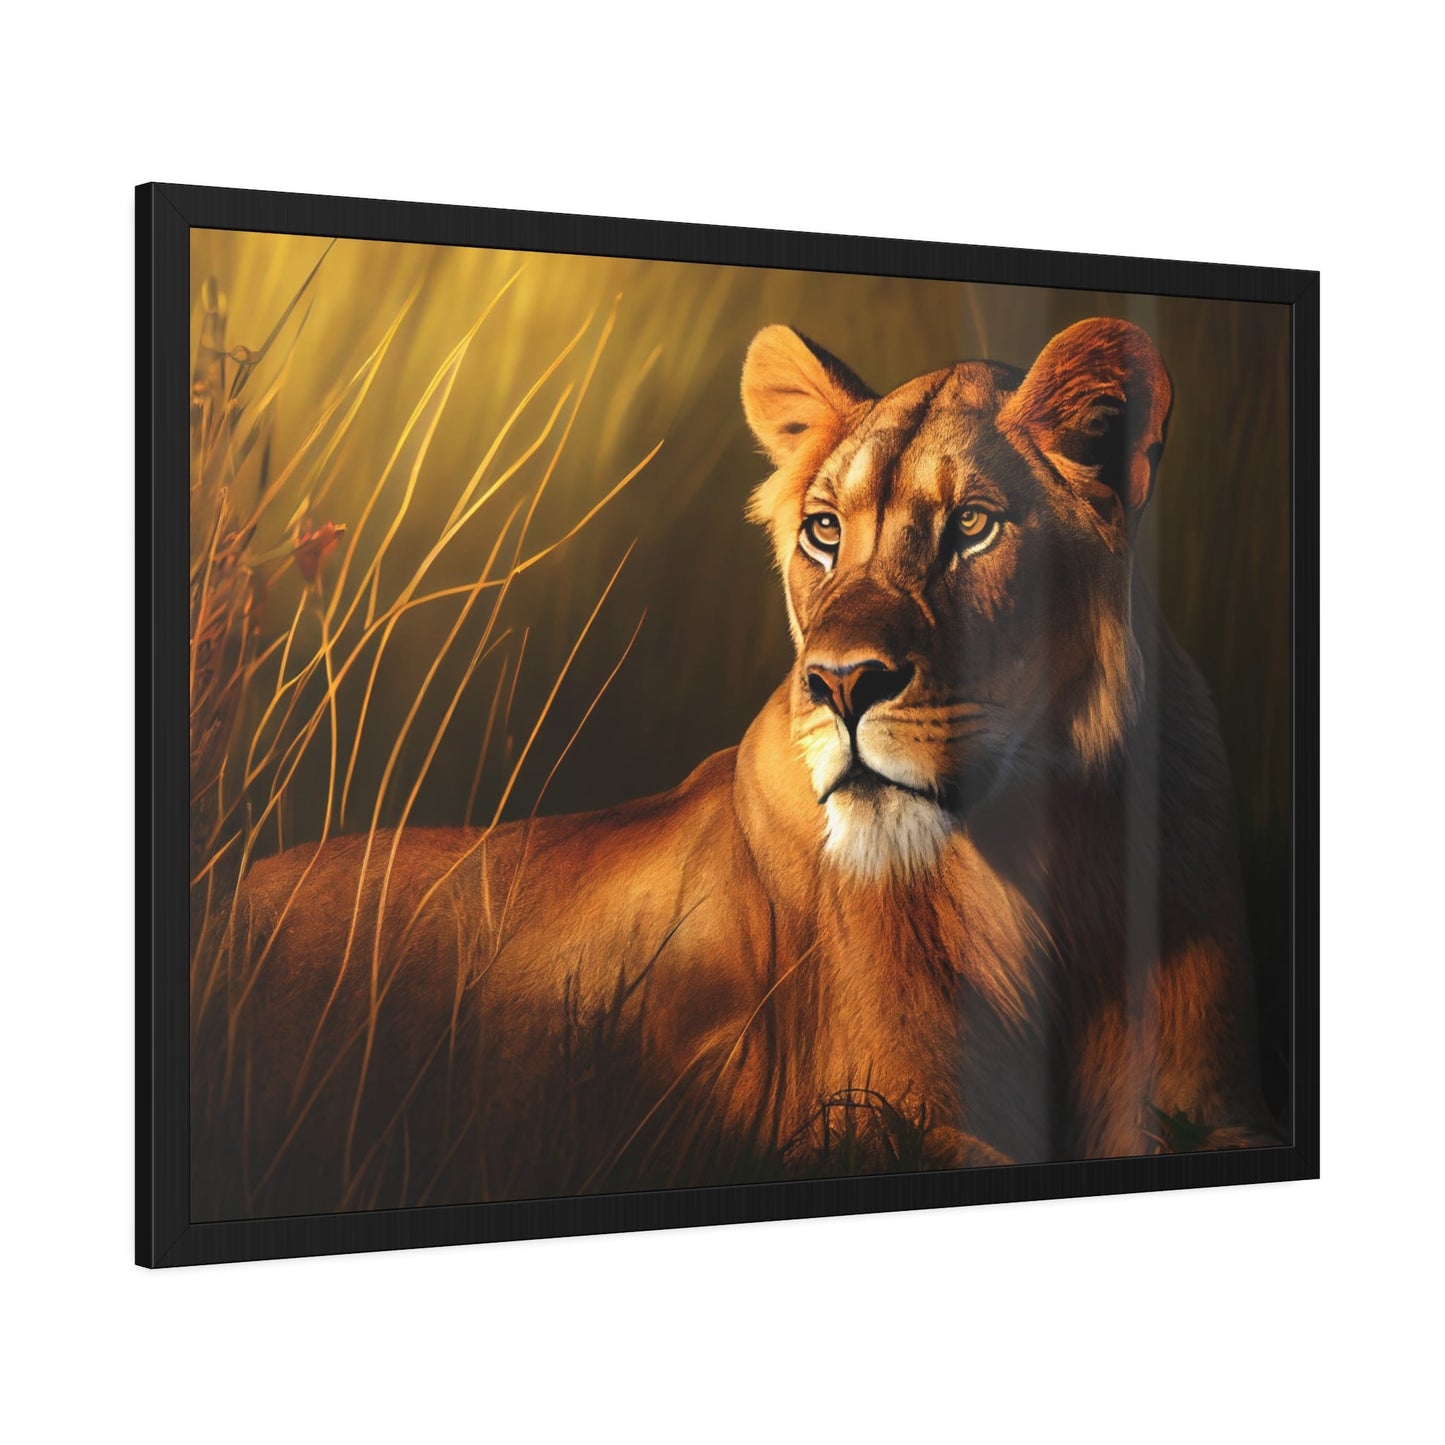 The Lion's Spirit: Canvas Print of the African Predator's Essence